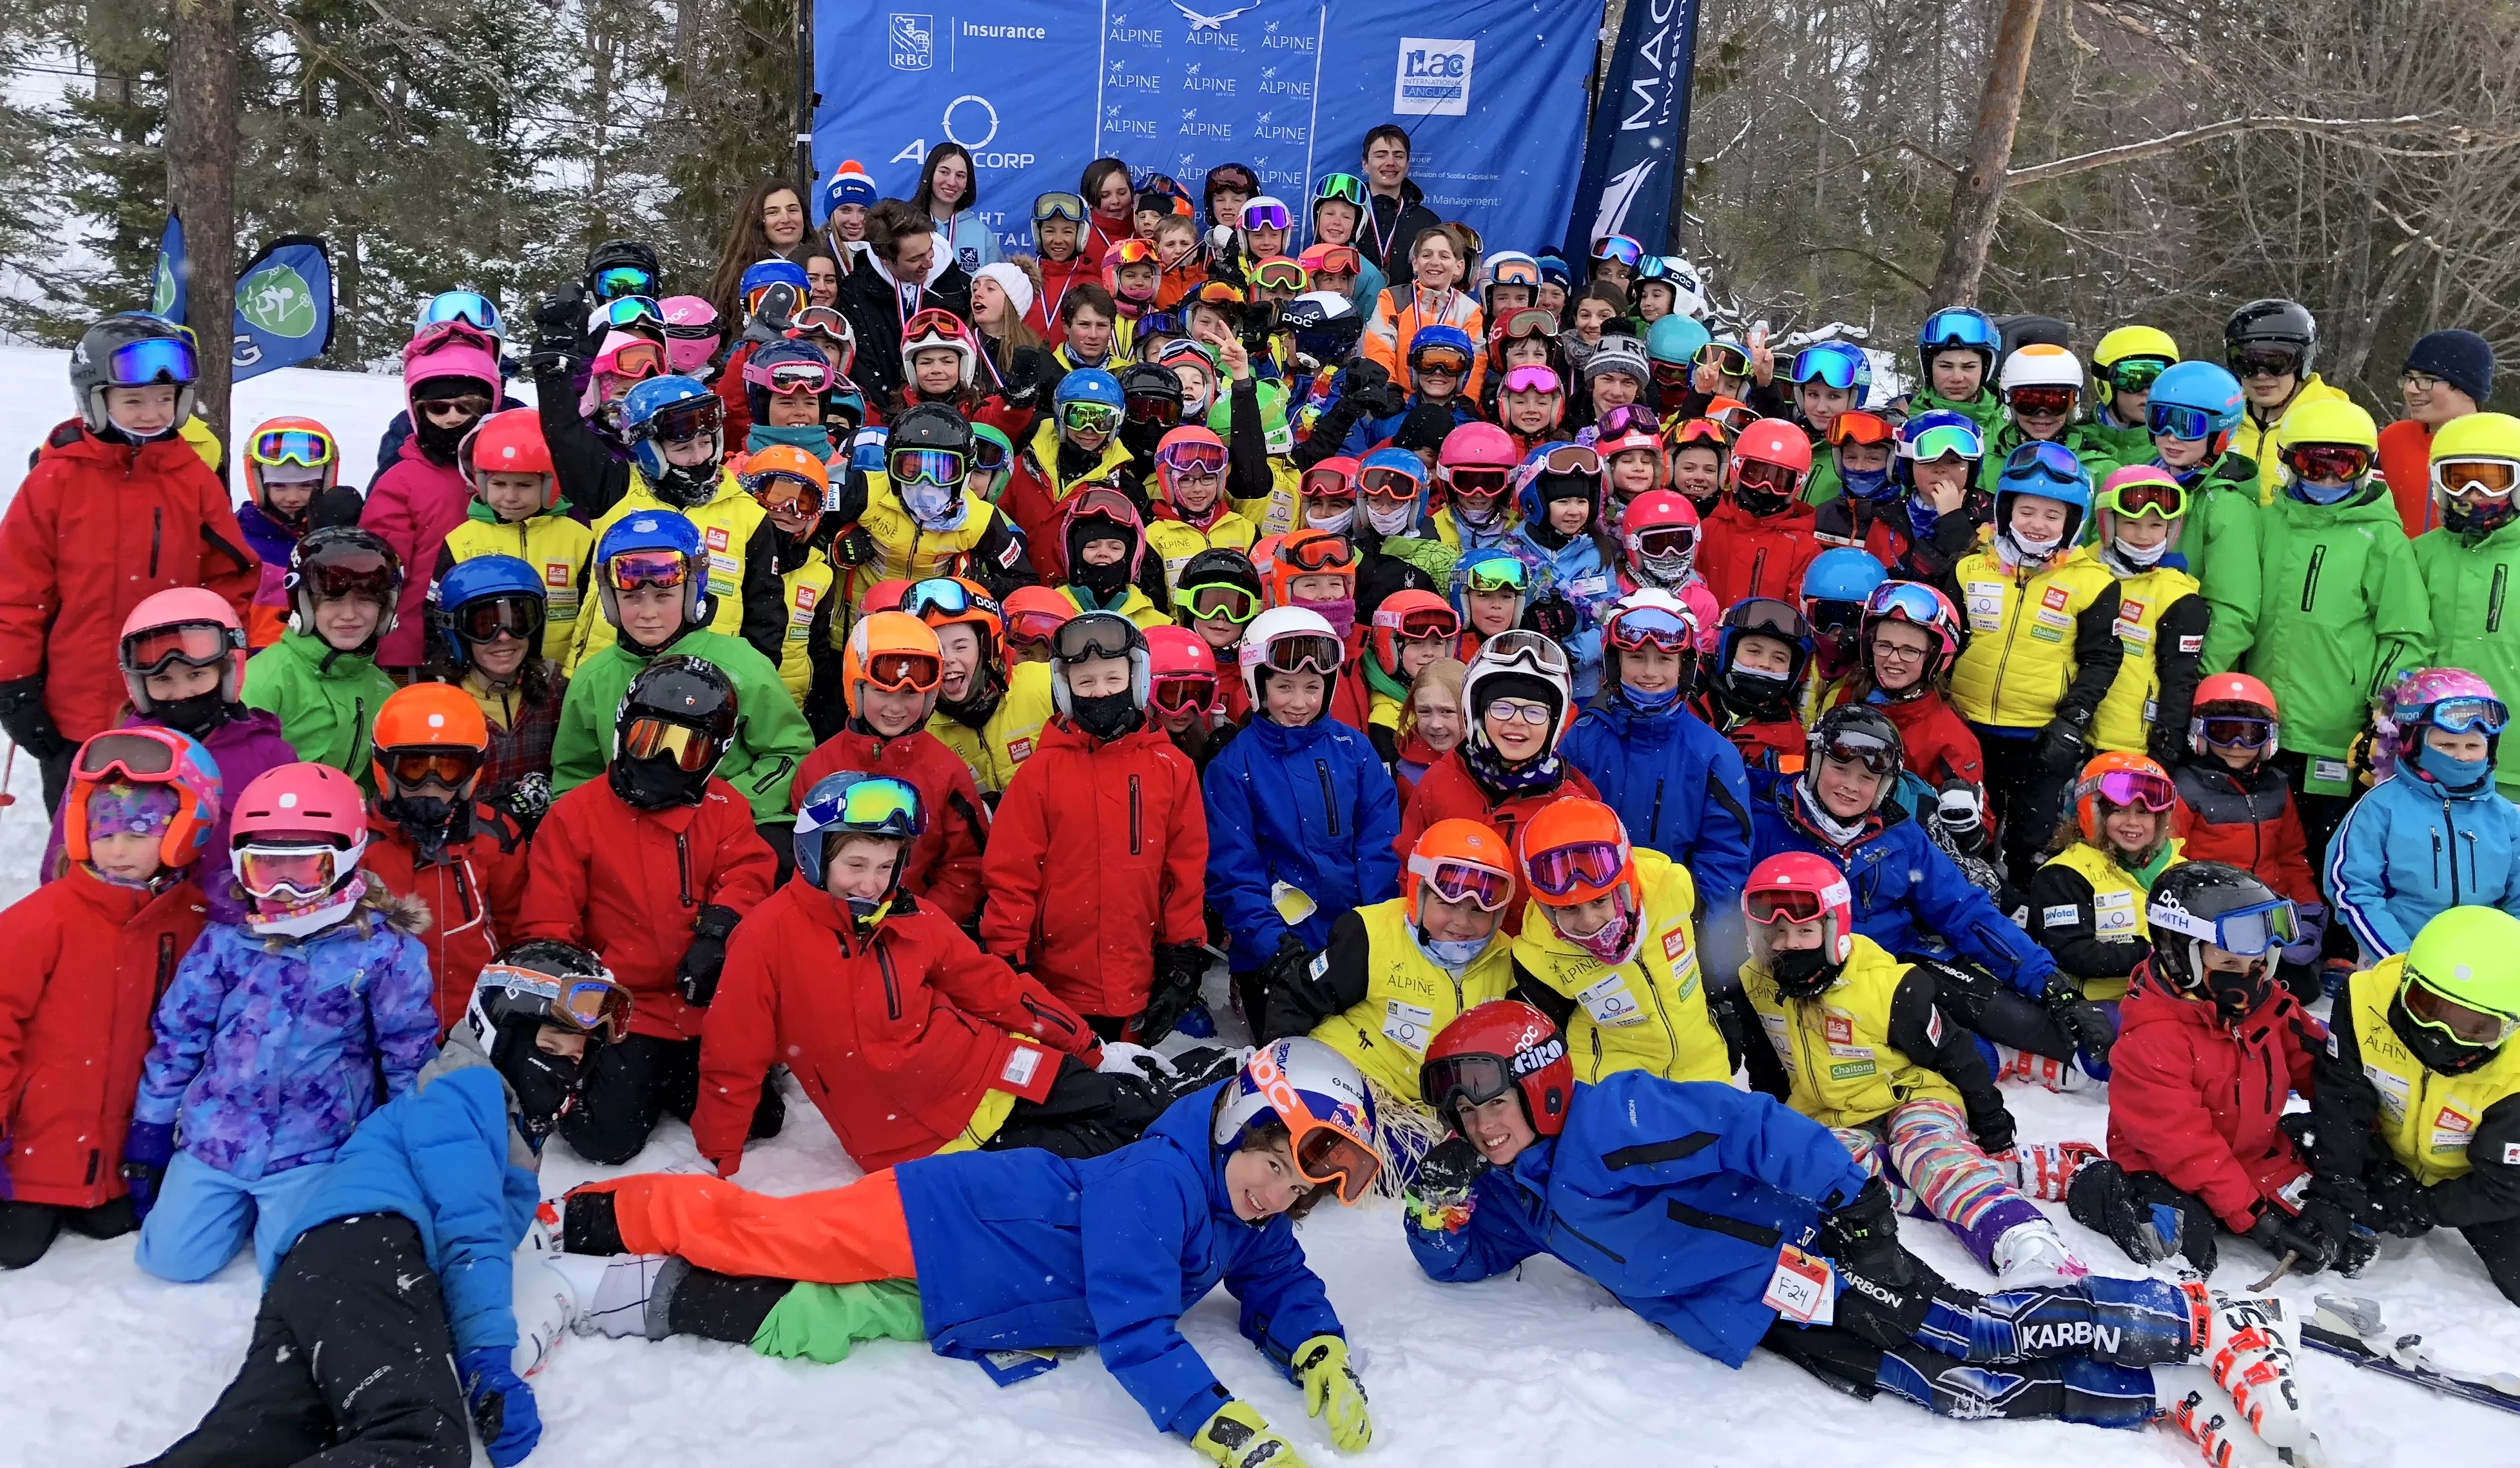 Alpine Ski Club in Canada, North America | Snowboarding,Skiing - Rated 0.9